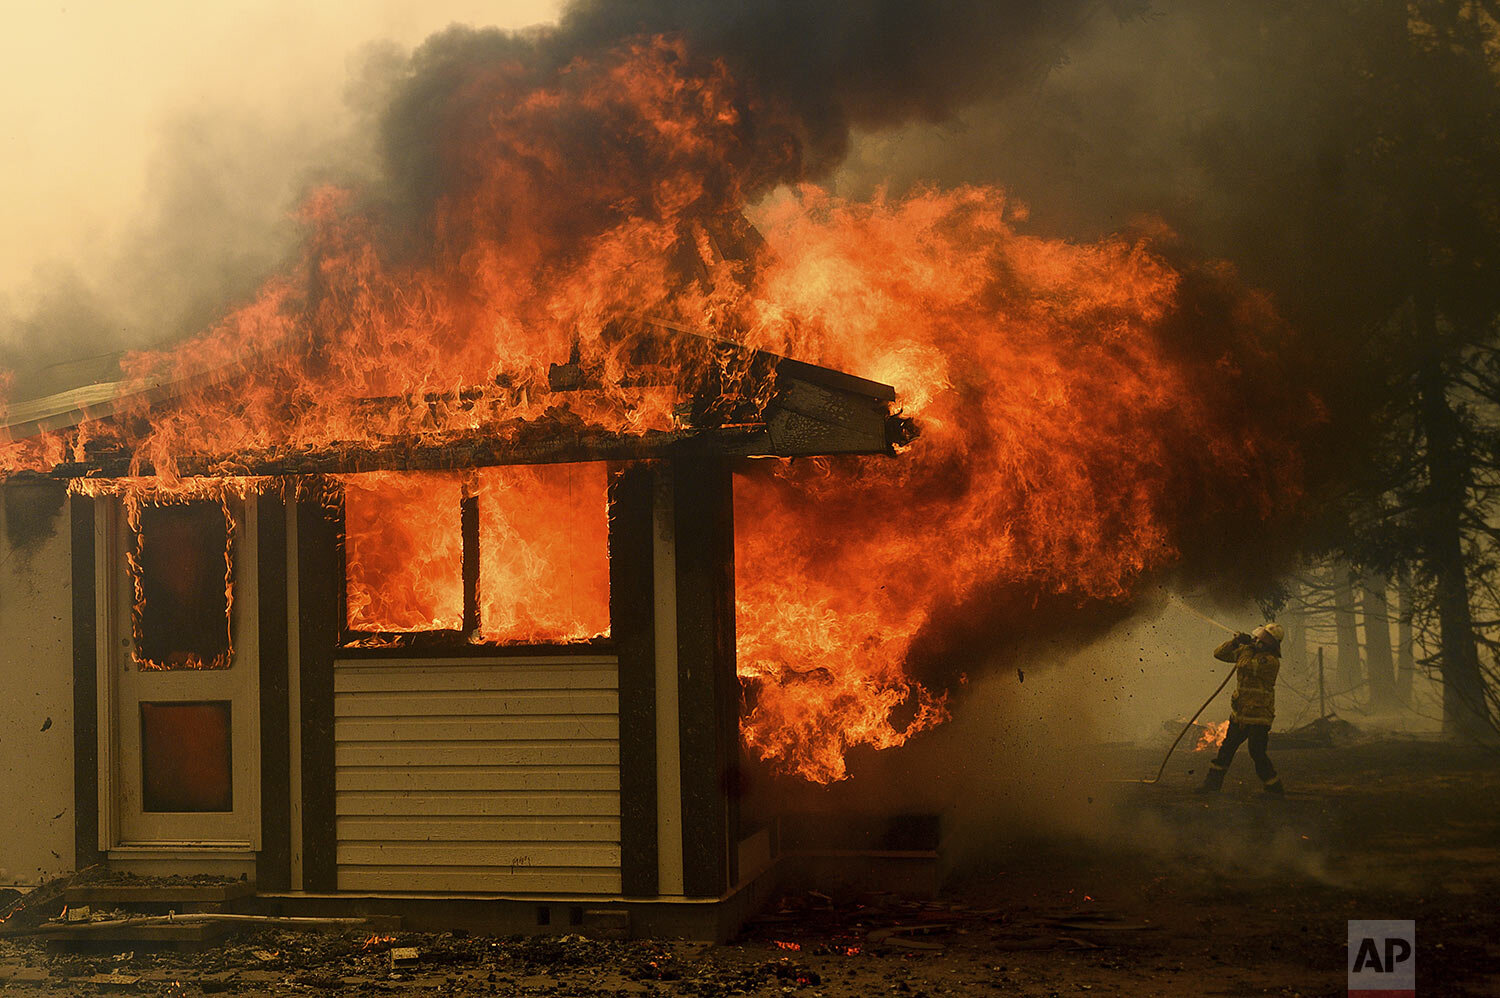  A firefighter battles the Morton Fire as it consumes a home near Bundanoon, New South Wales, Australia, Thursday, Jan. 23, 2020. (AP Photo (AP Photo/Noah Berger) 